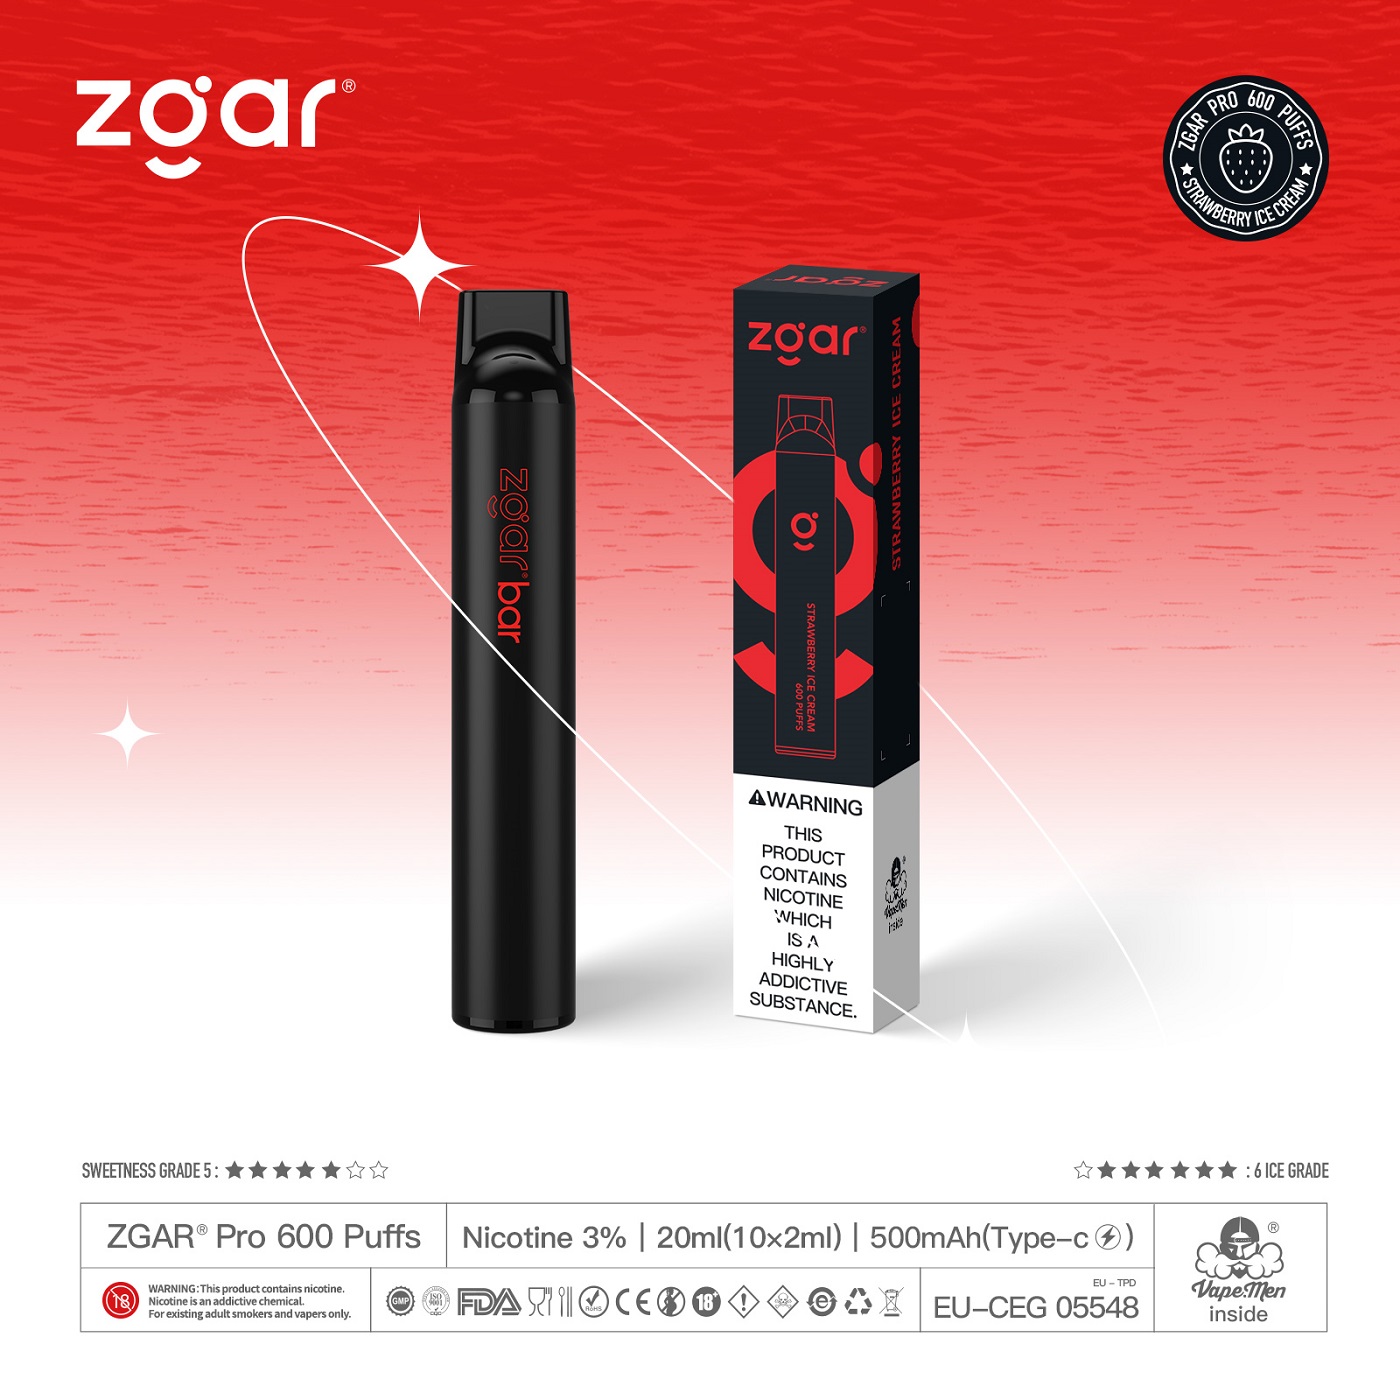 ZGAR 600 Strawberry Lce Cream